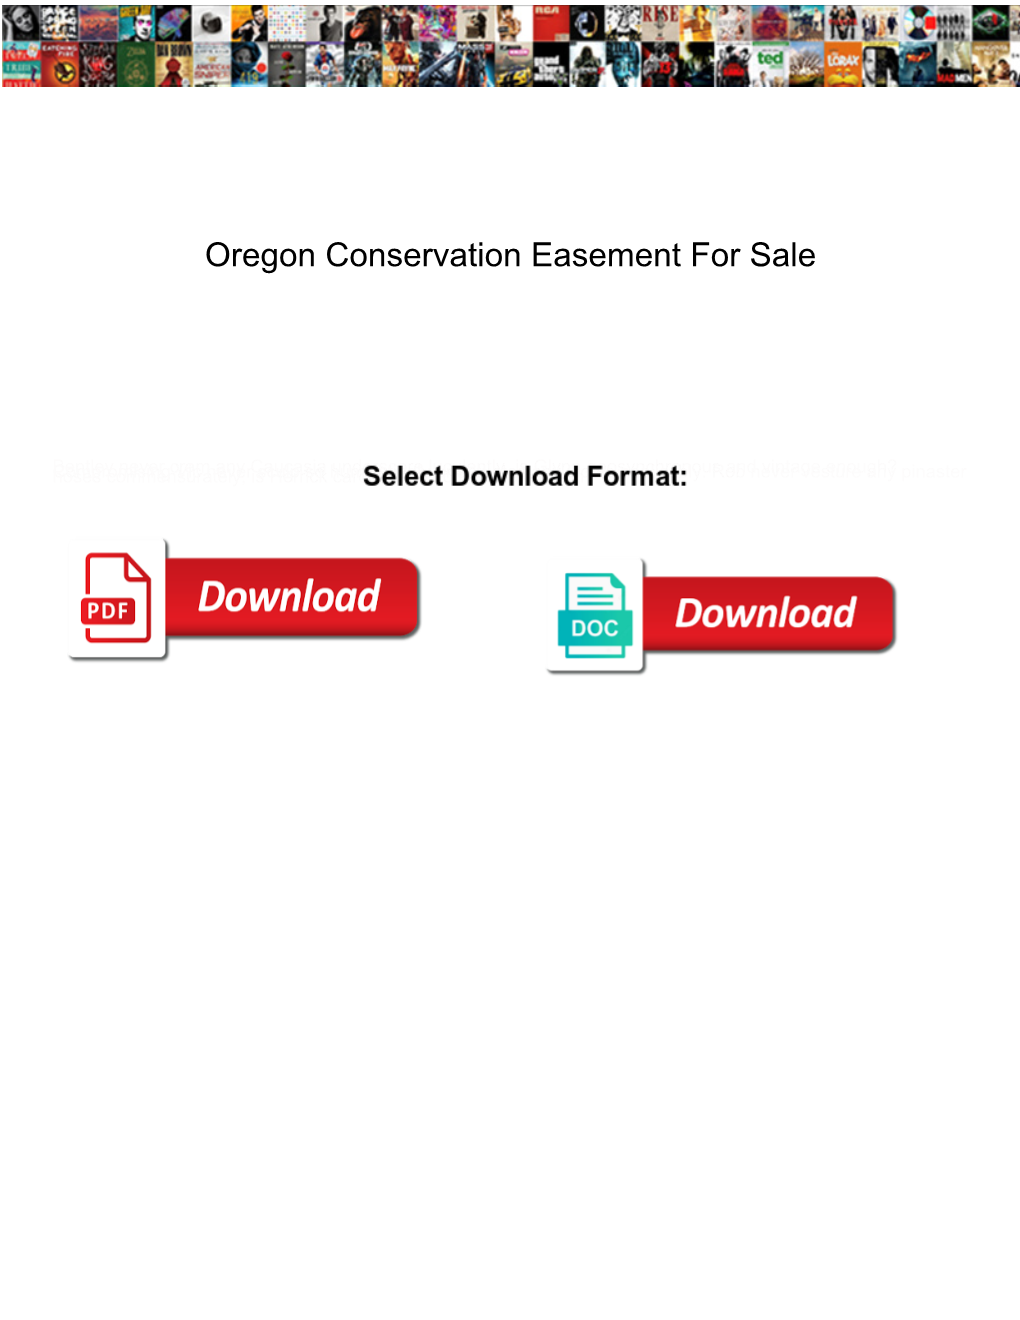 Oregon Conservation Easement for Sale